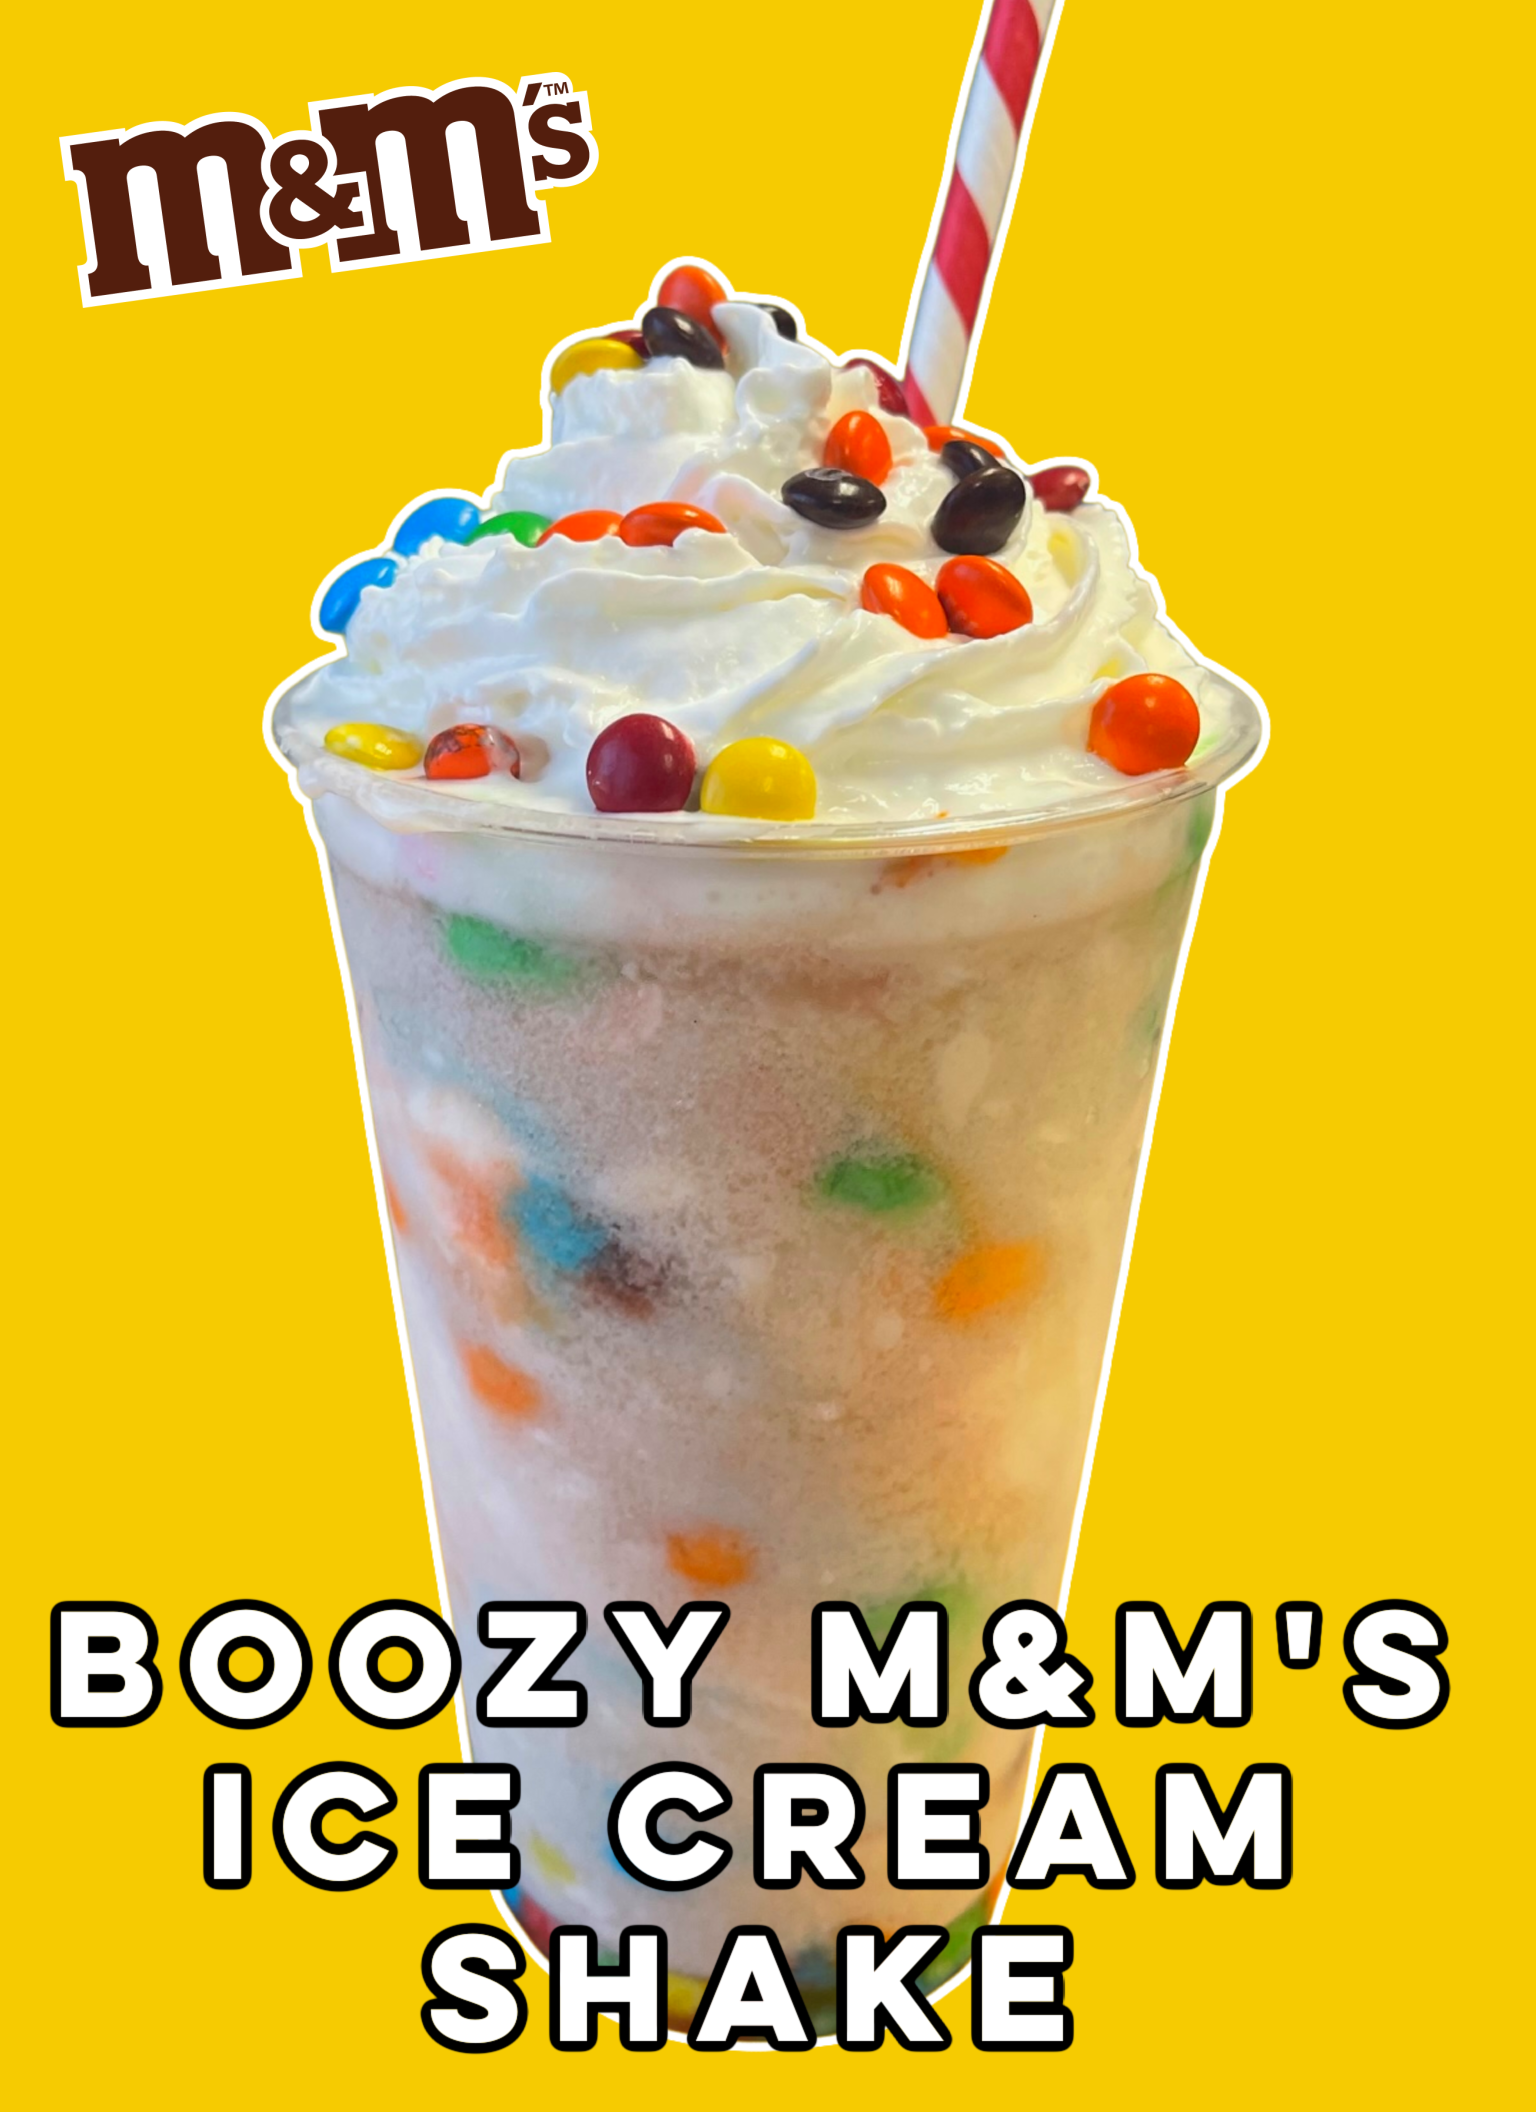 Boozy M&M’s Ice Cream Shake